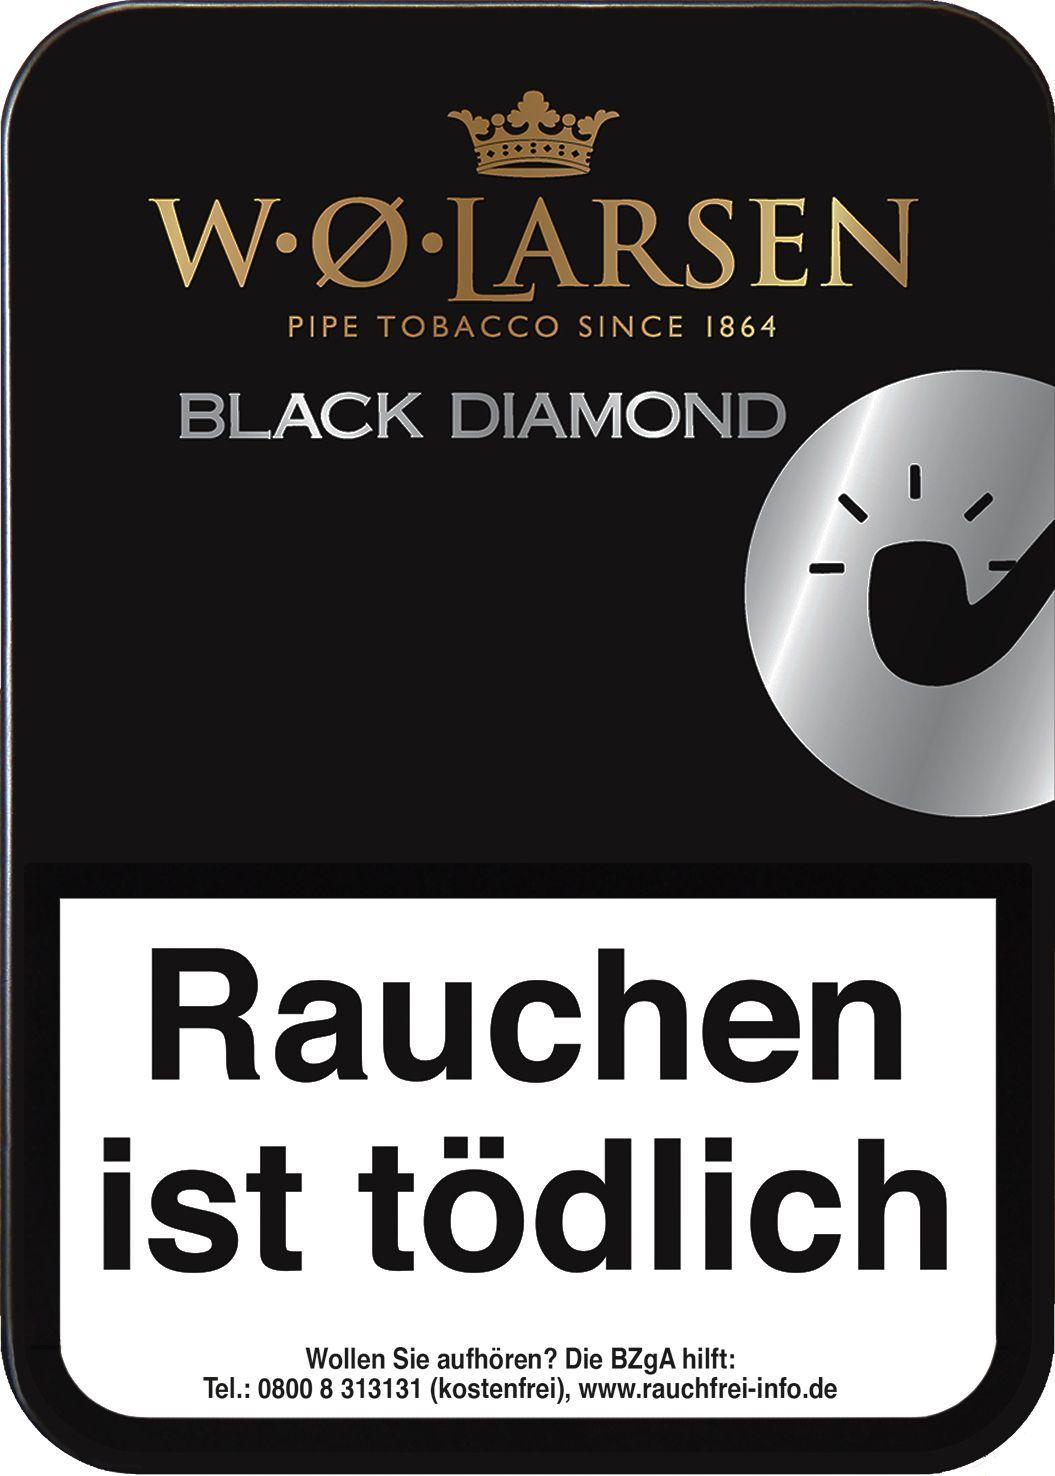 W.O. Larsen Pfeifentabak Black Diamond 1 Dose